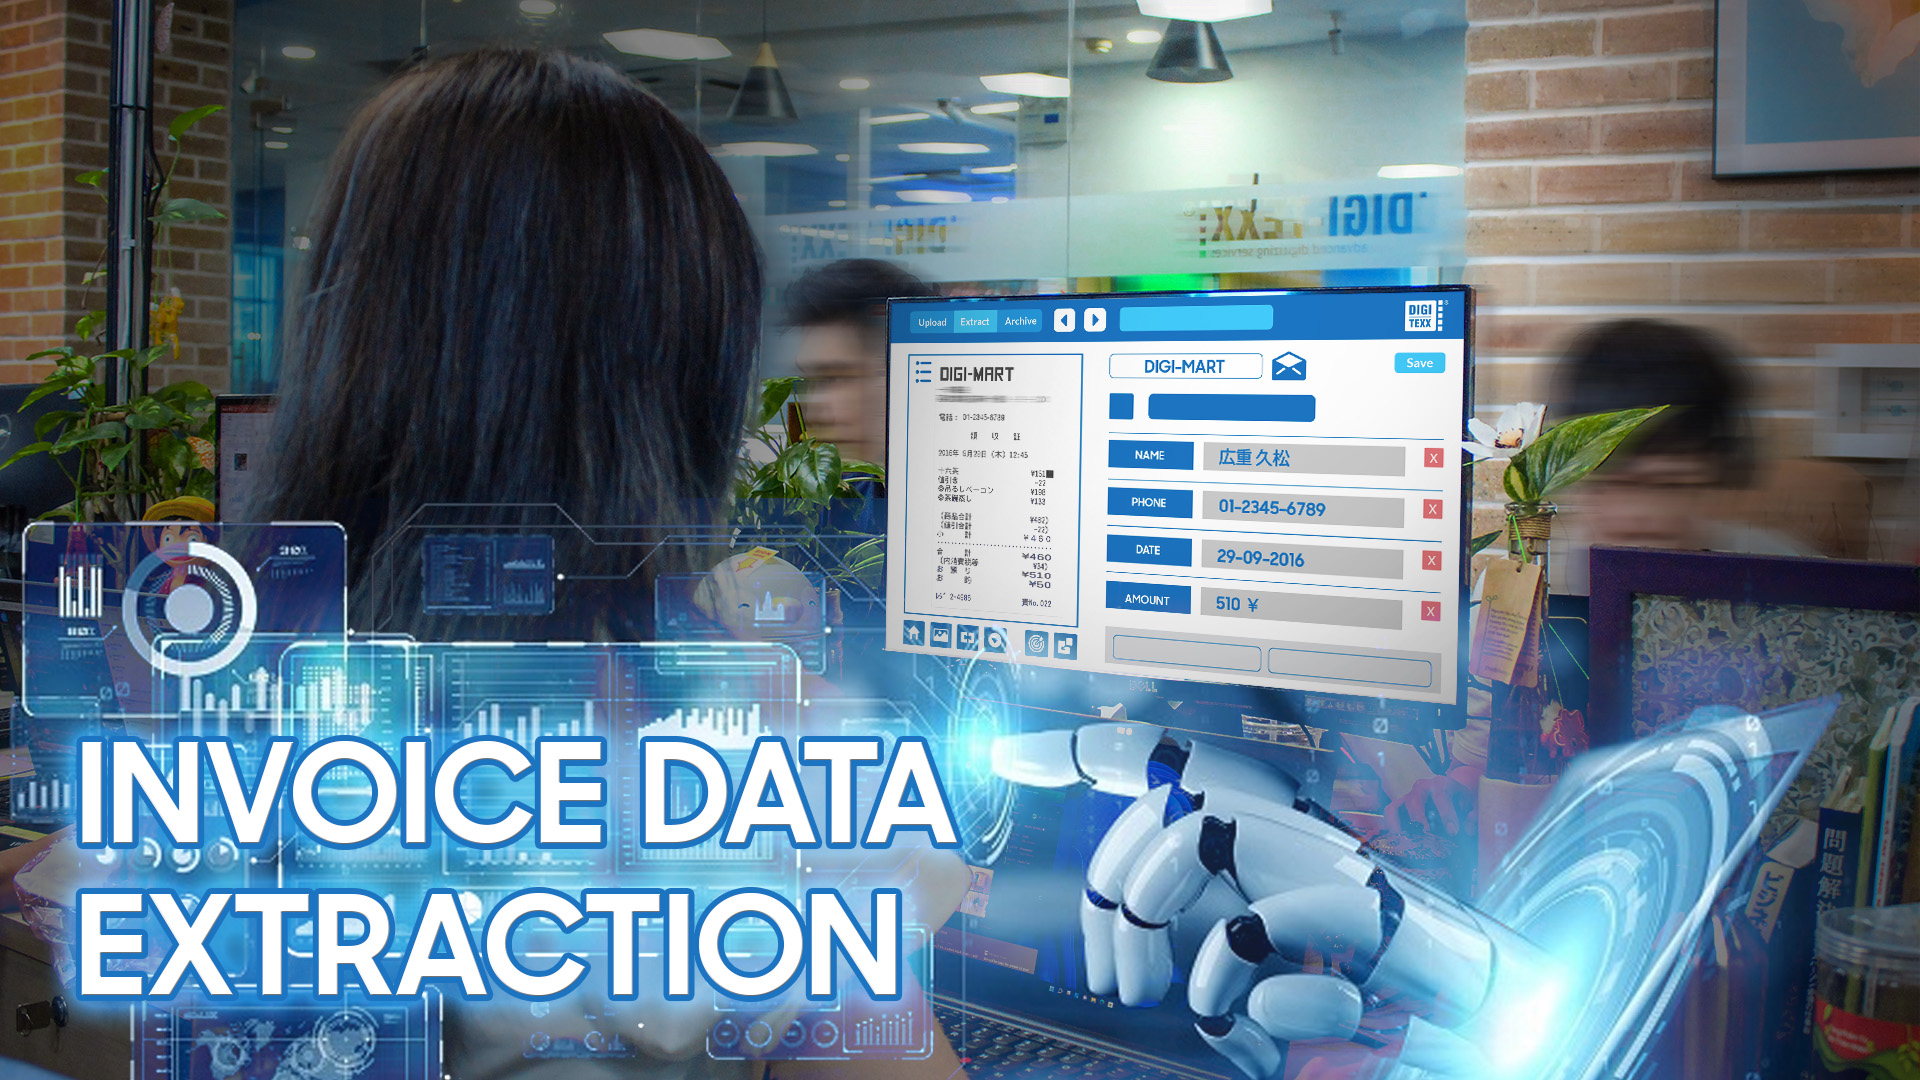 Invoice Data Extraction